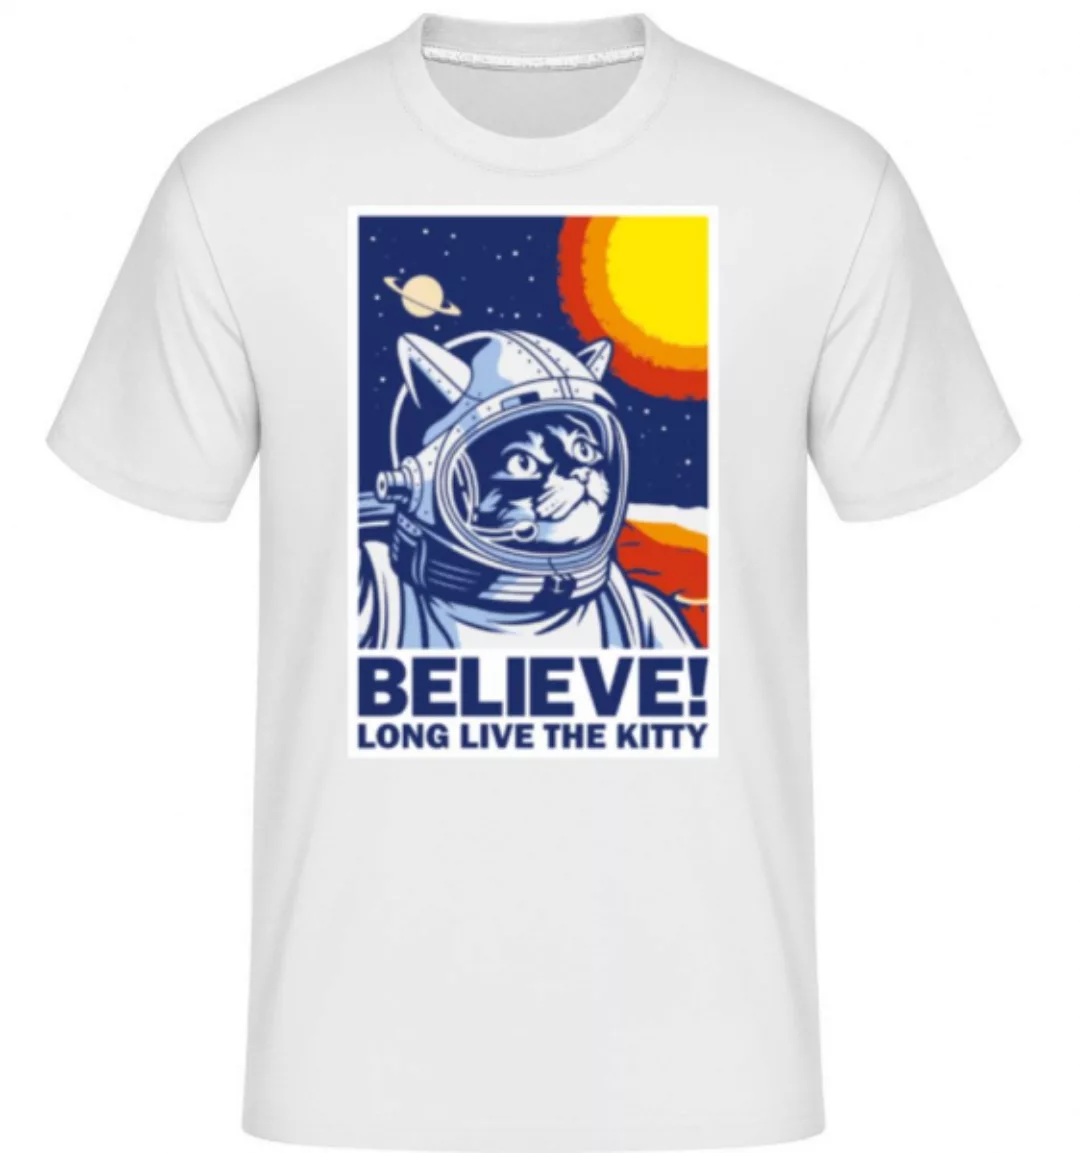 Believe · Shirtinator Männer T-Shirt günstig online kaufen